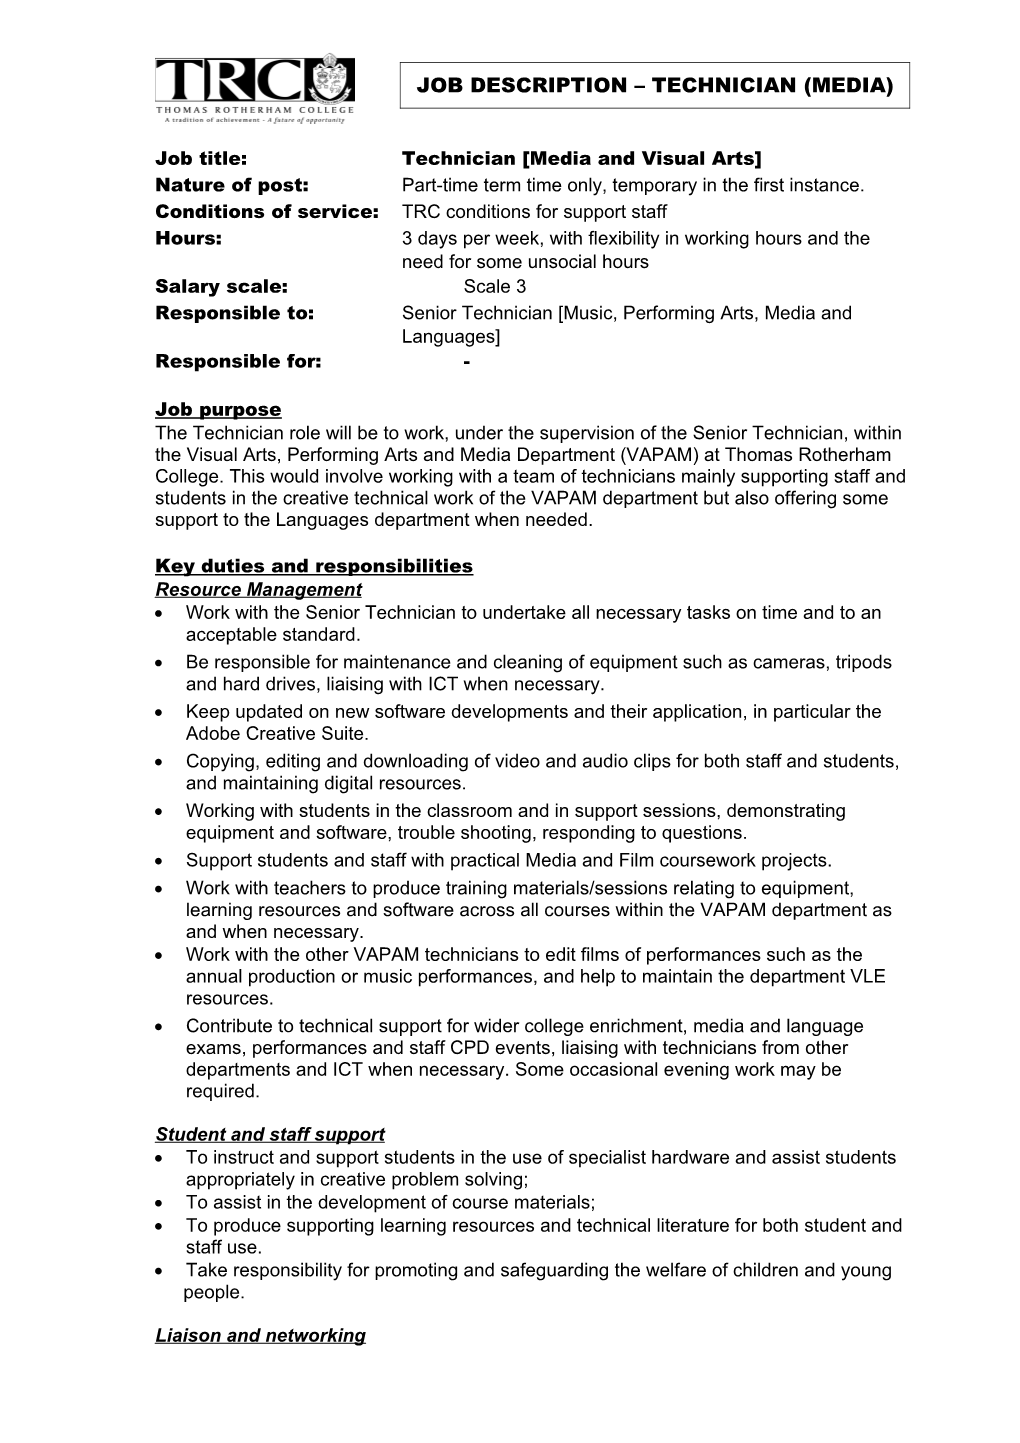 Draft Job Description for Media Technician